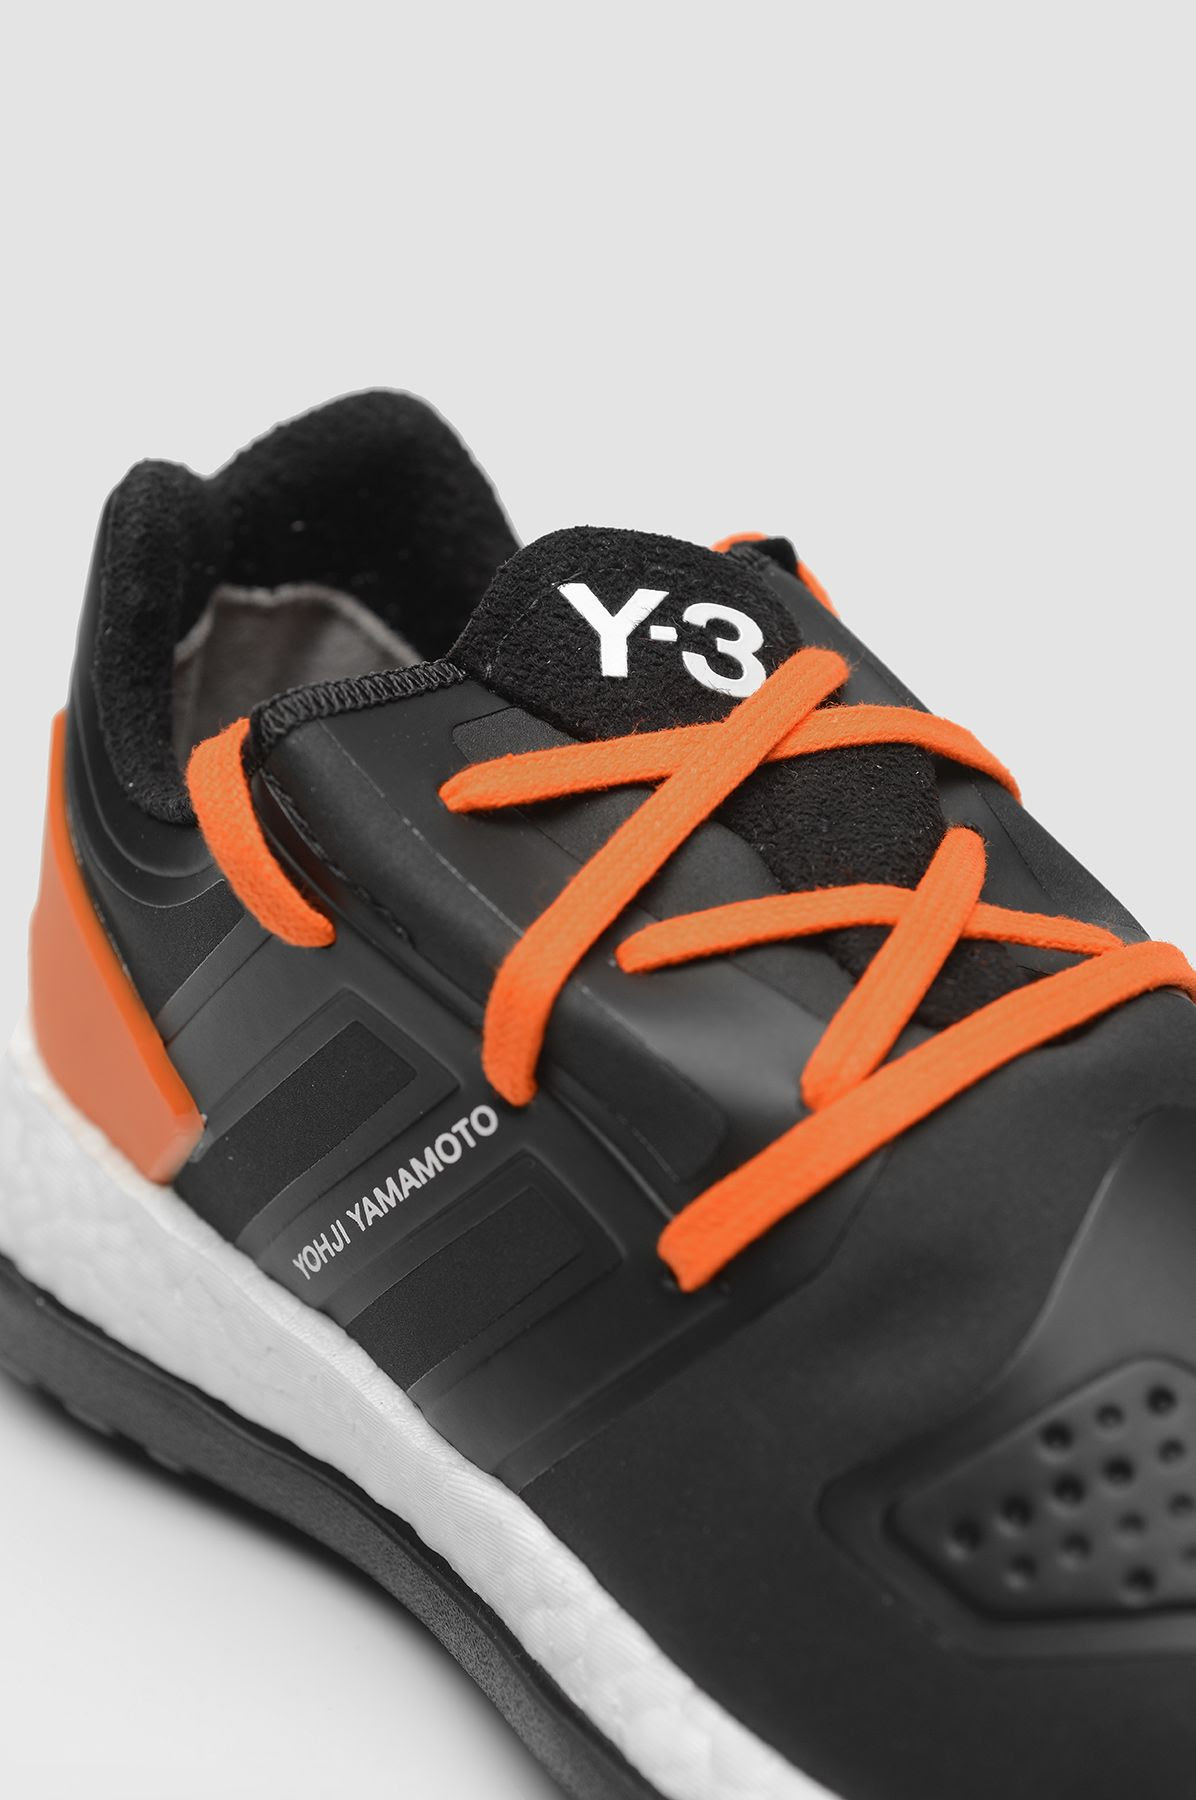 y3-pure-boost-zg-black-orange-4